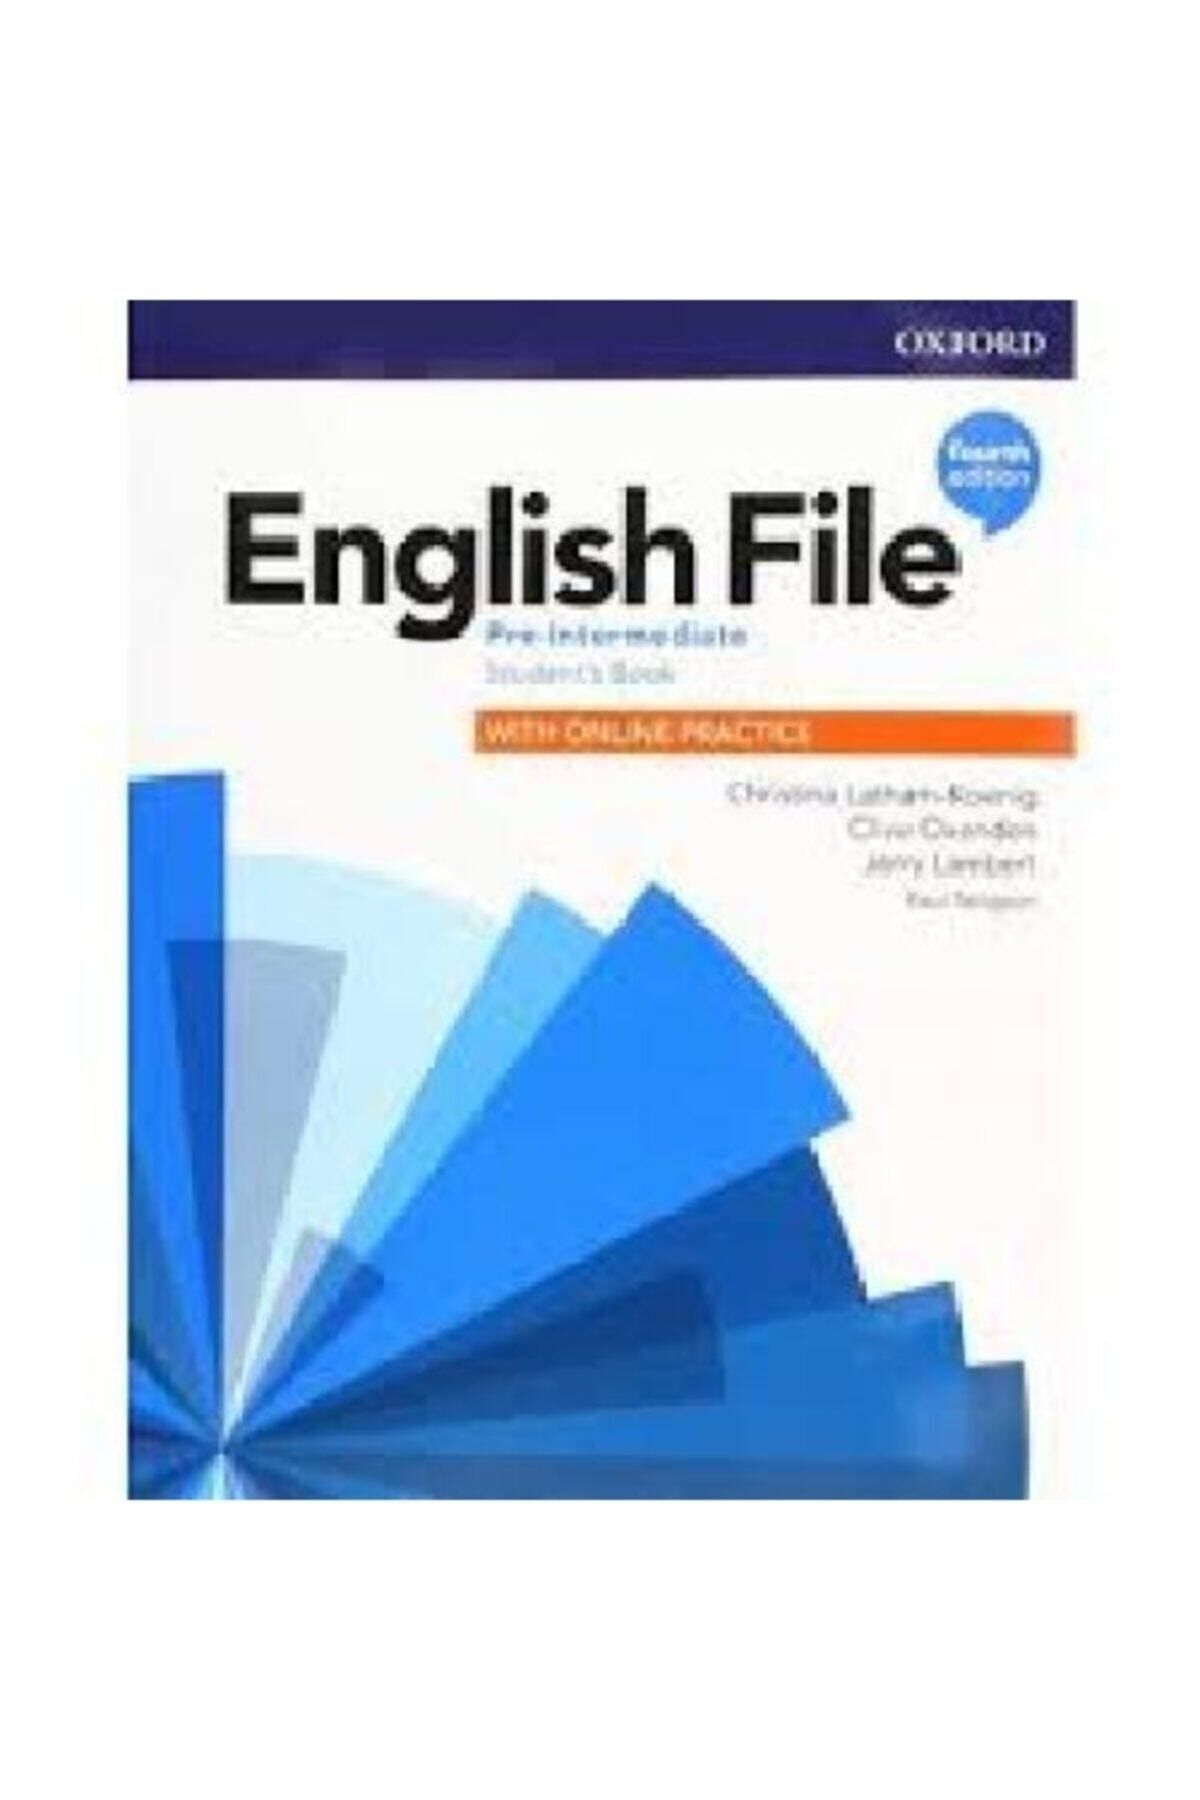 English file practical english. English file Elementary 4th Edition уровень. English file fourth Edition. English file Elementary student's book. English file Elementary 4th Edition купить.